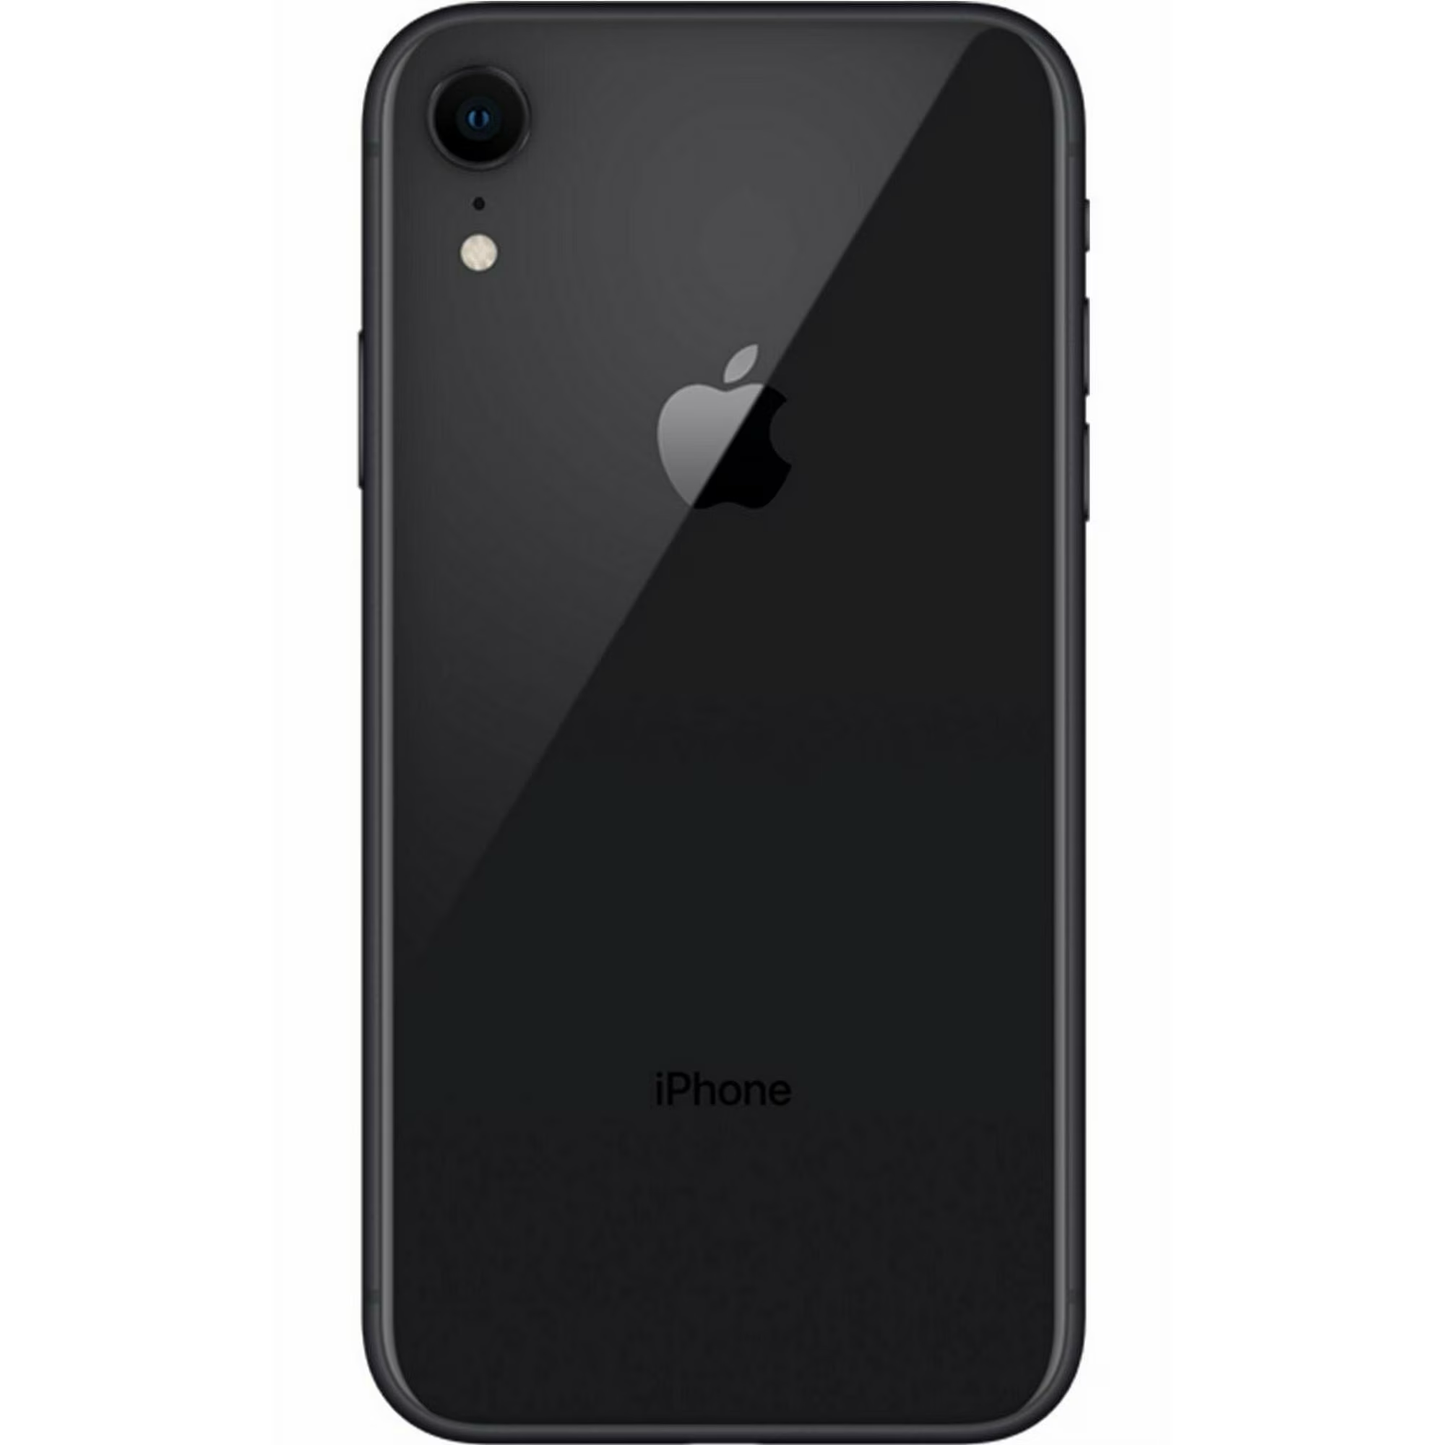 iPhone XR (64gb) - BLACK